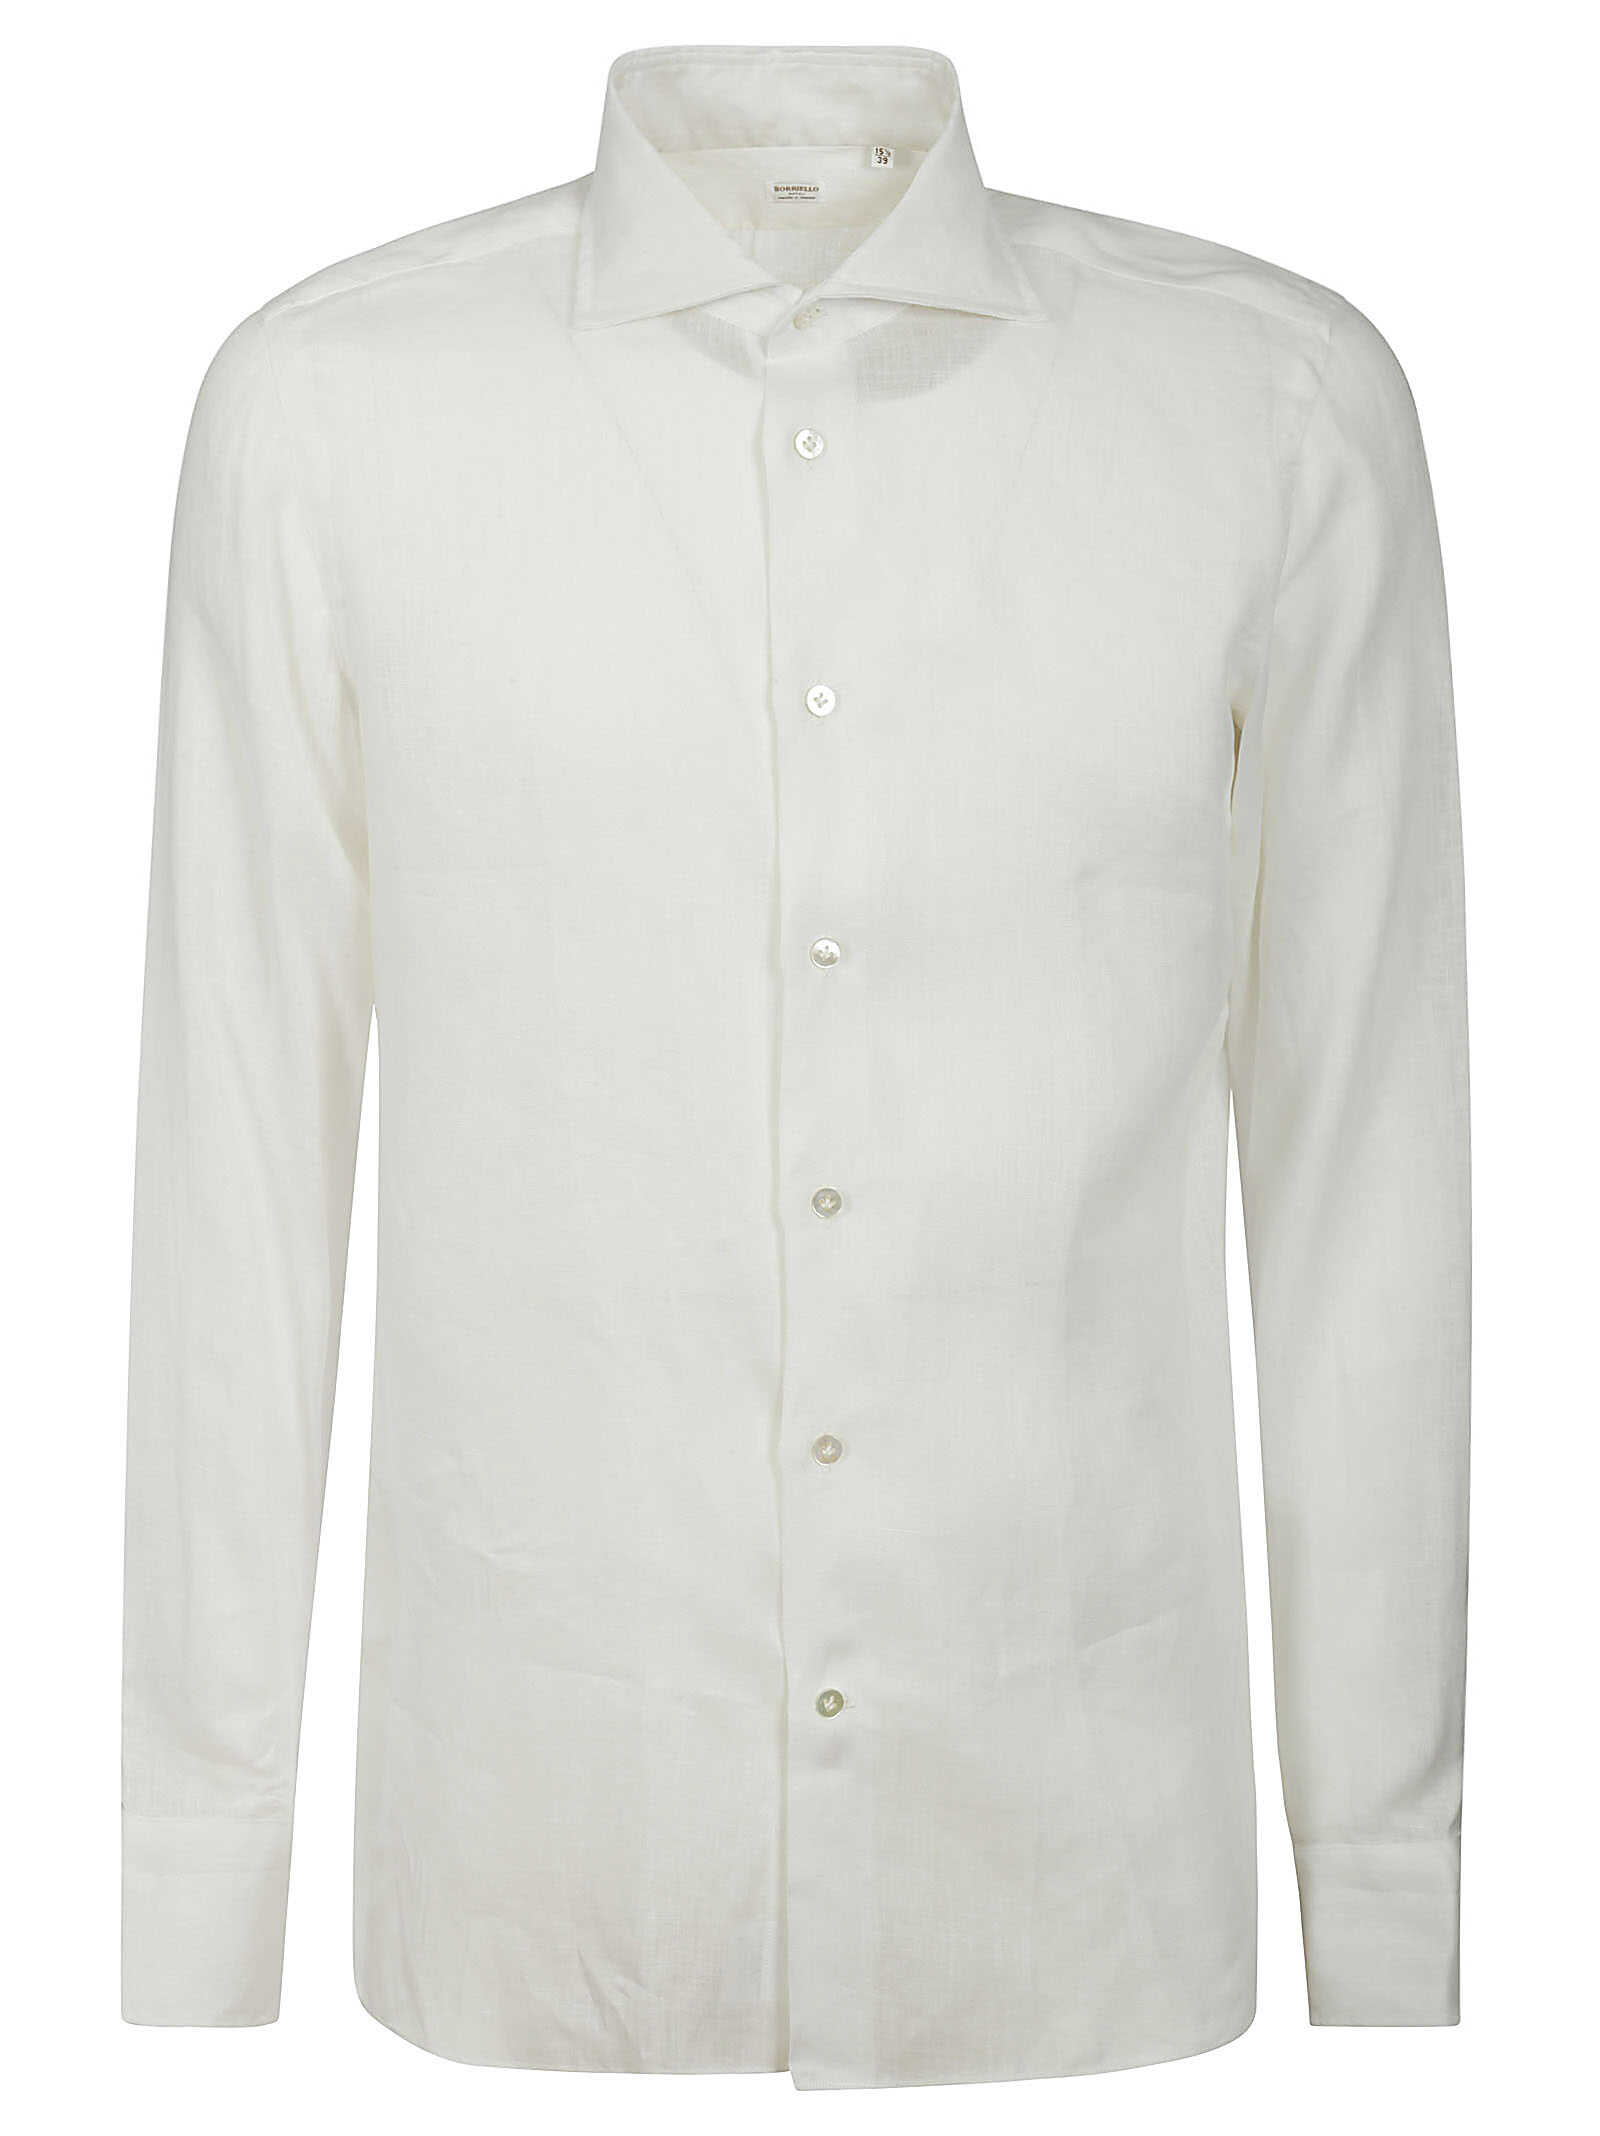 BORRIELLO Borriello Shirt 16035 1 WHITE White